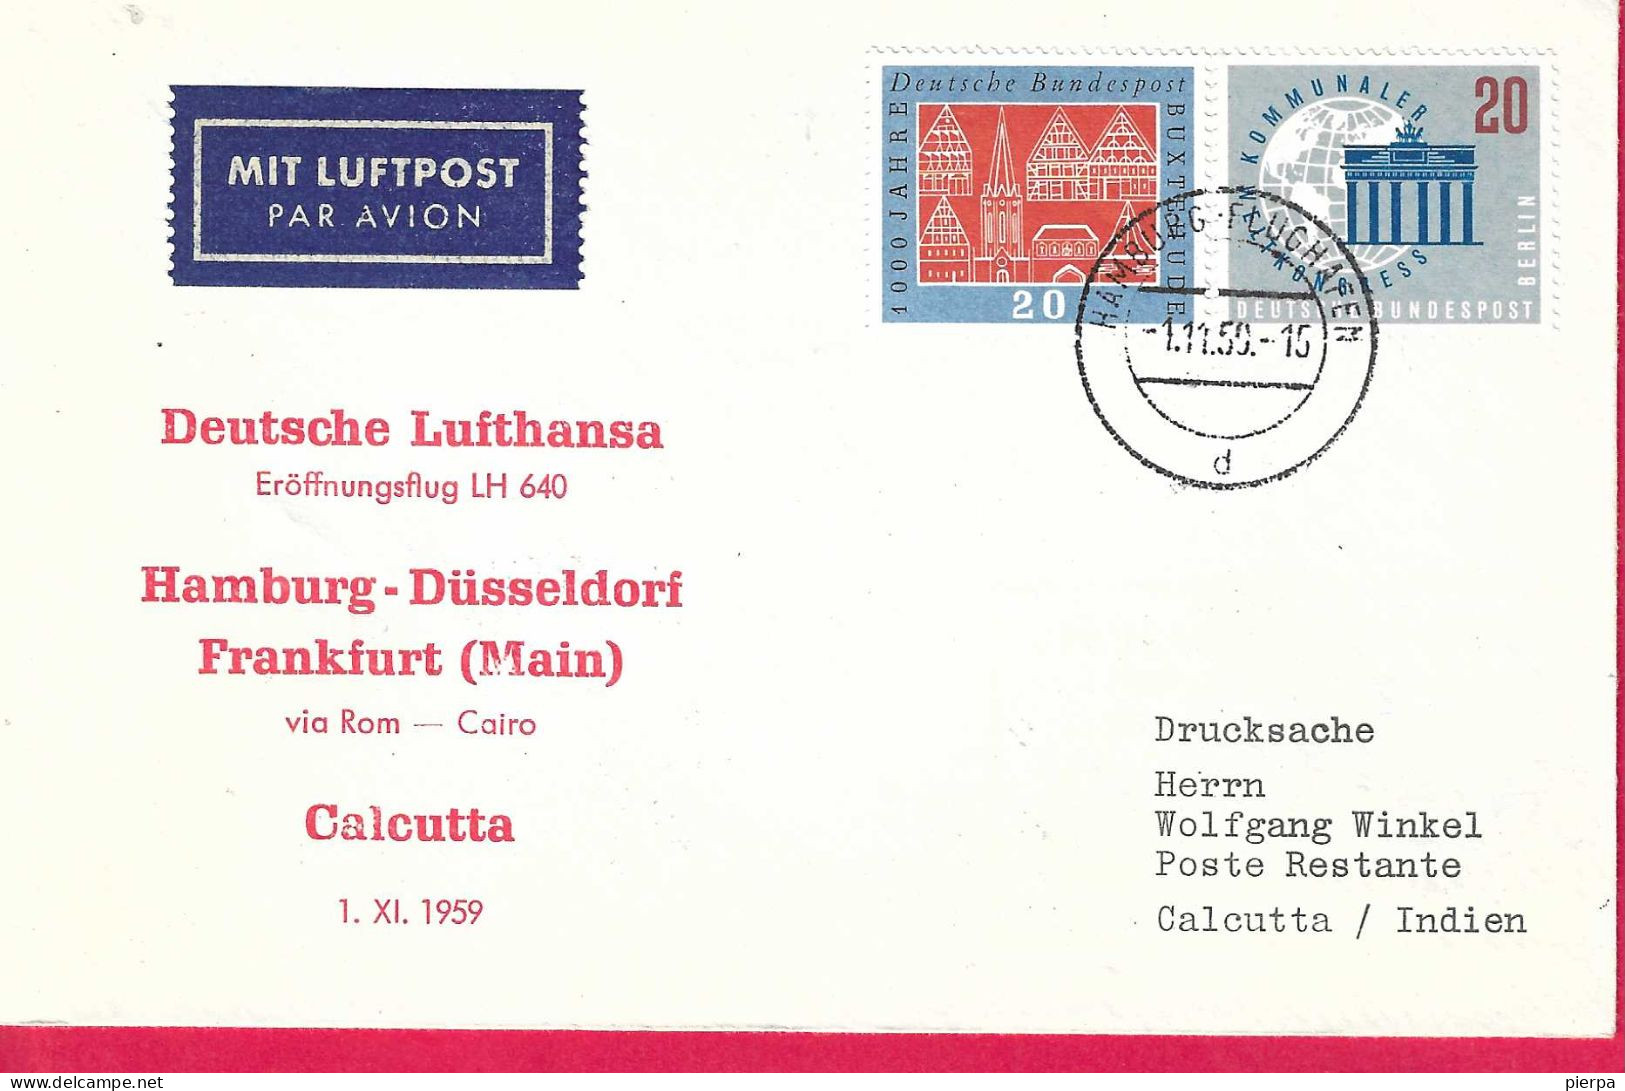 GERMANY - FIRST FLIGHT LUFTHANSA LH640 - FRANKFURT/ CALCUTTA *1.11.59* ON OFFICIAL COVER - Premiers Vols